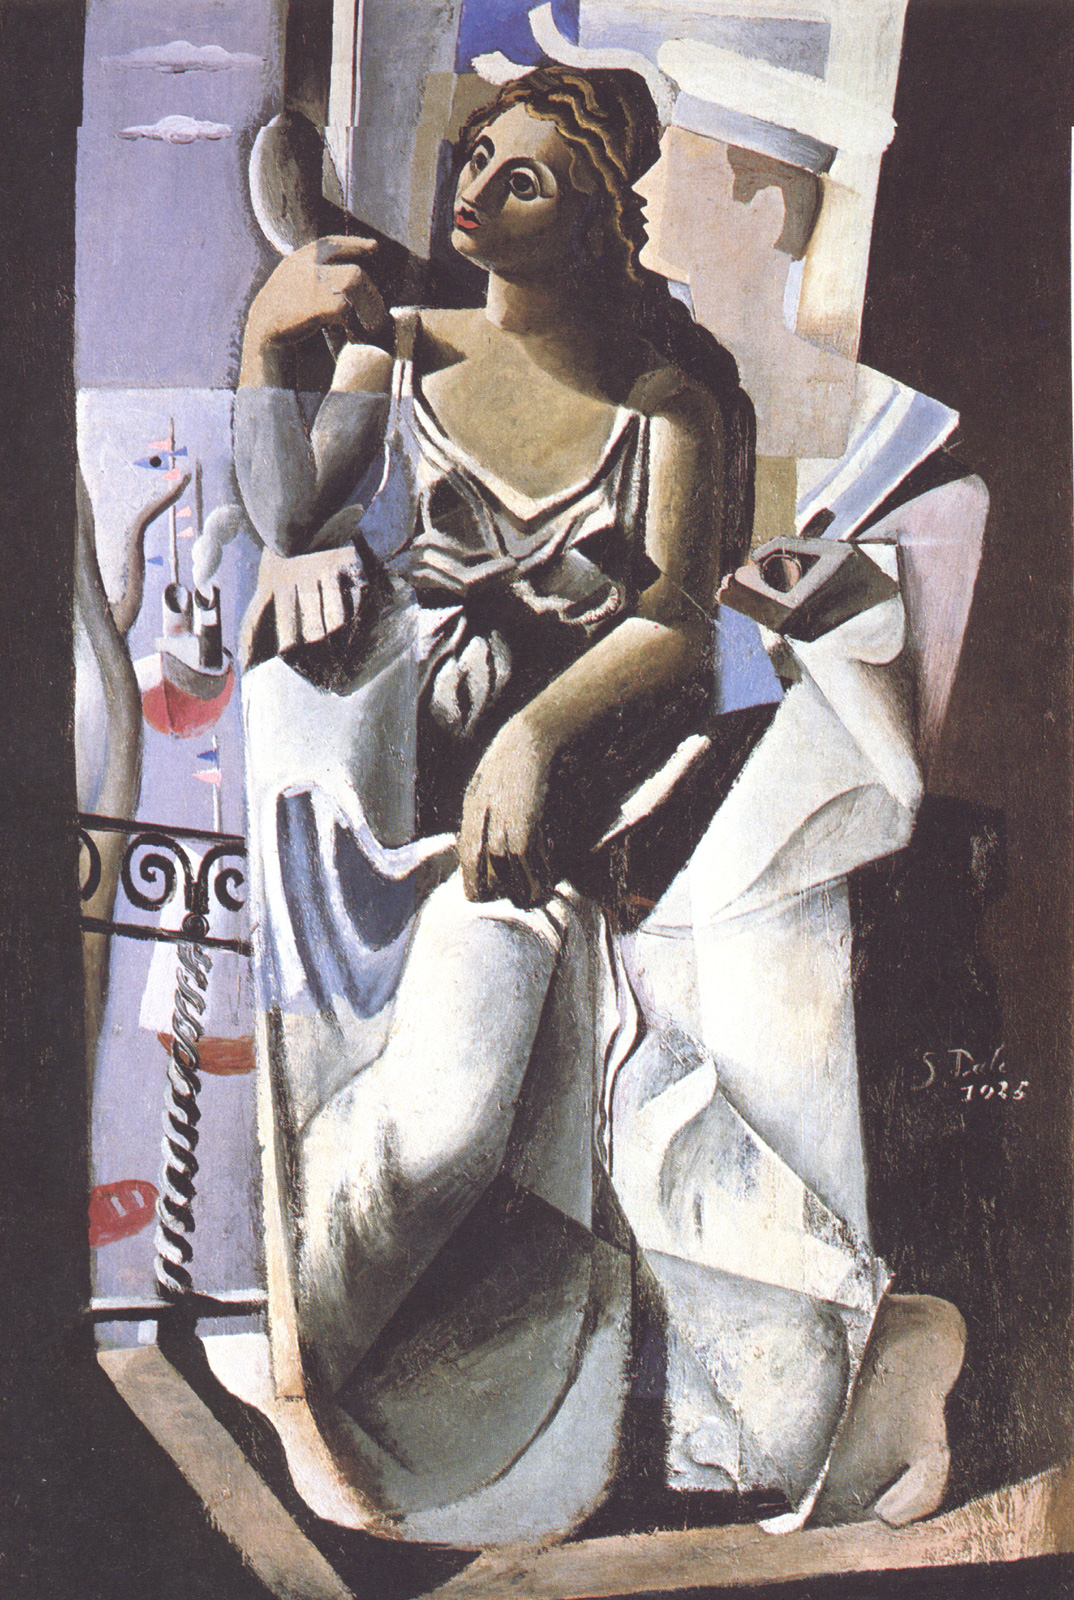 Venus and Sailor (Homage to Salvat-Papasseit) (1925).